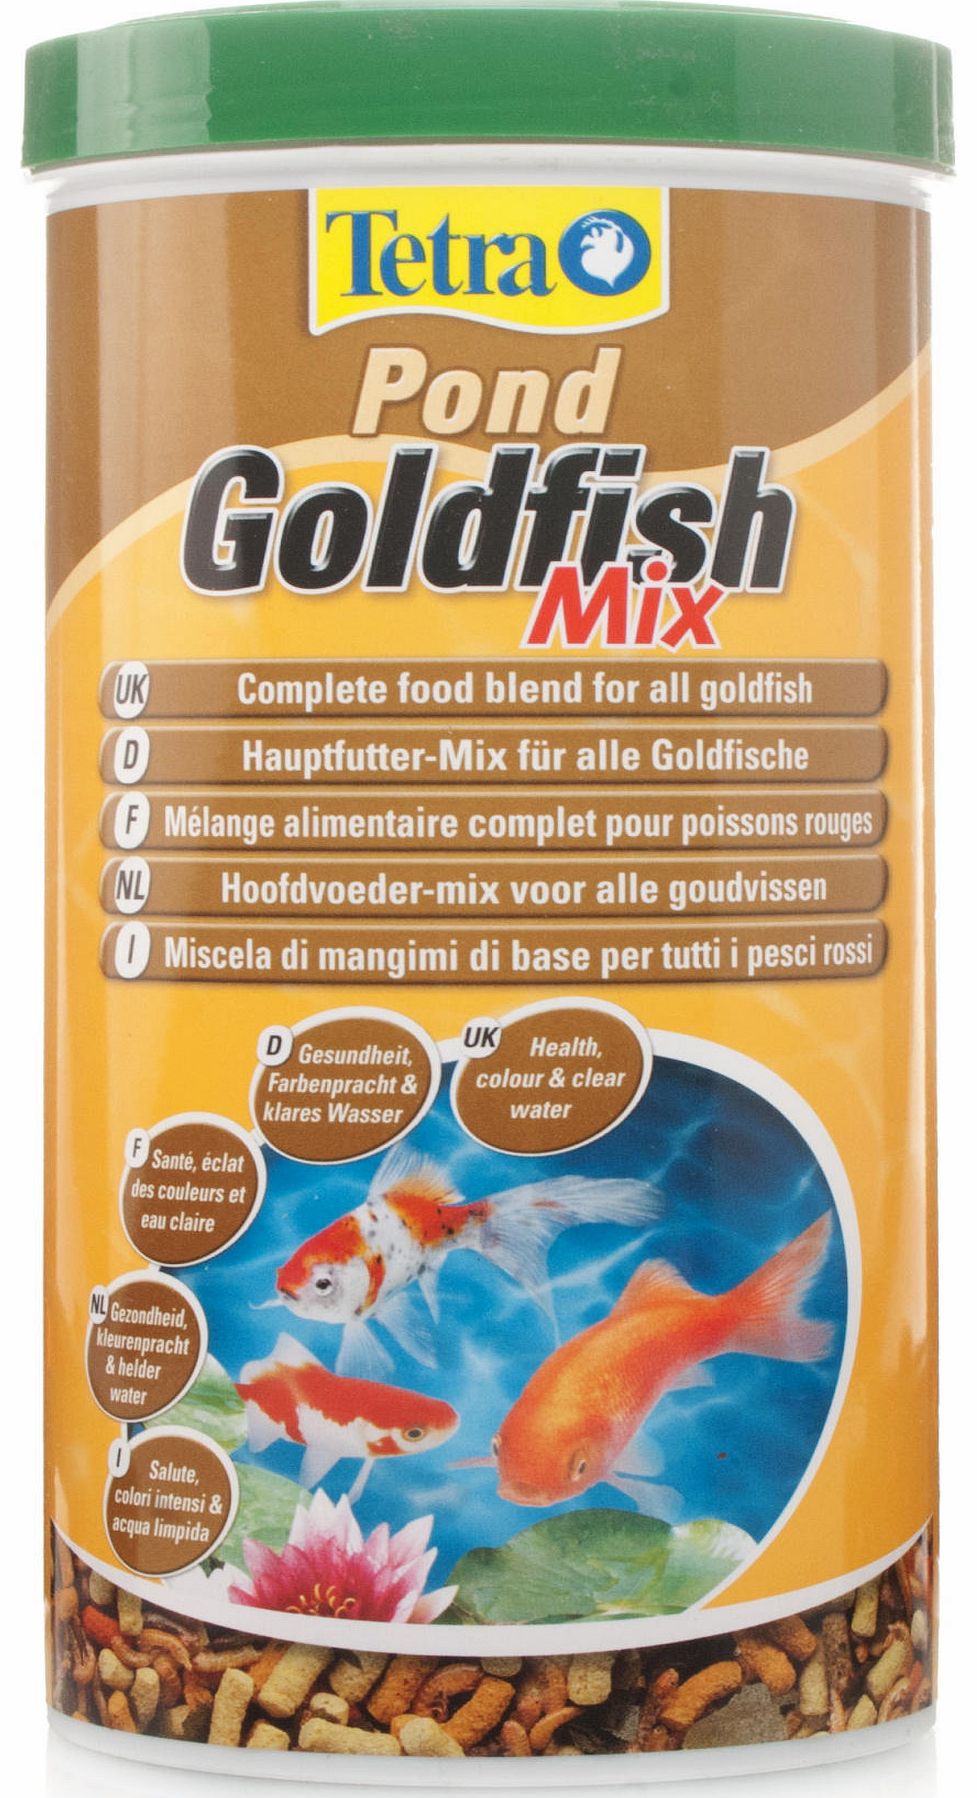 Tetra Pond Goldfish Mixture 140g